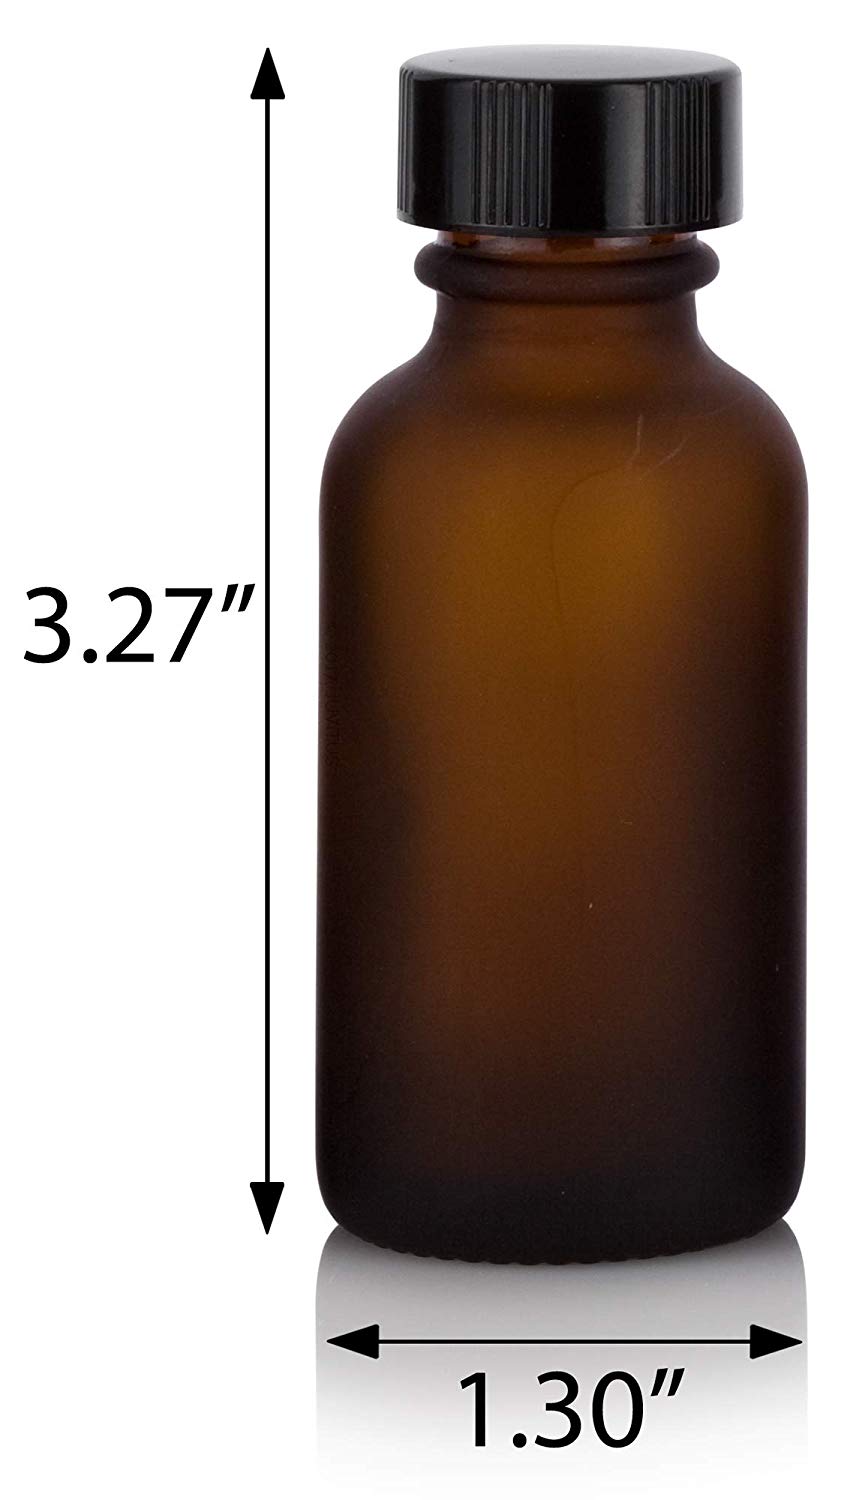 16 oz Amber Glass Bottle w/ Phenolic Cap